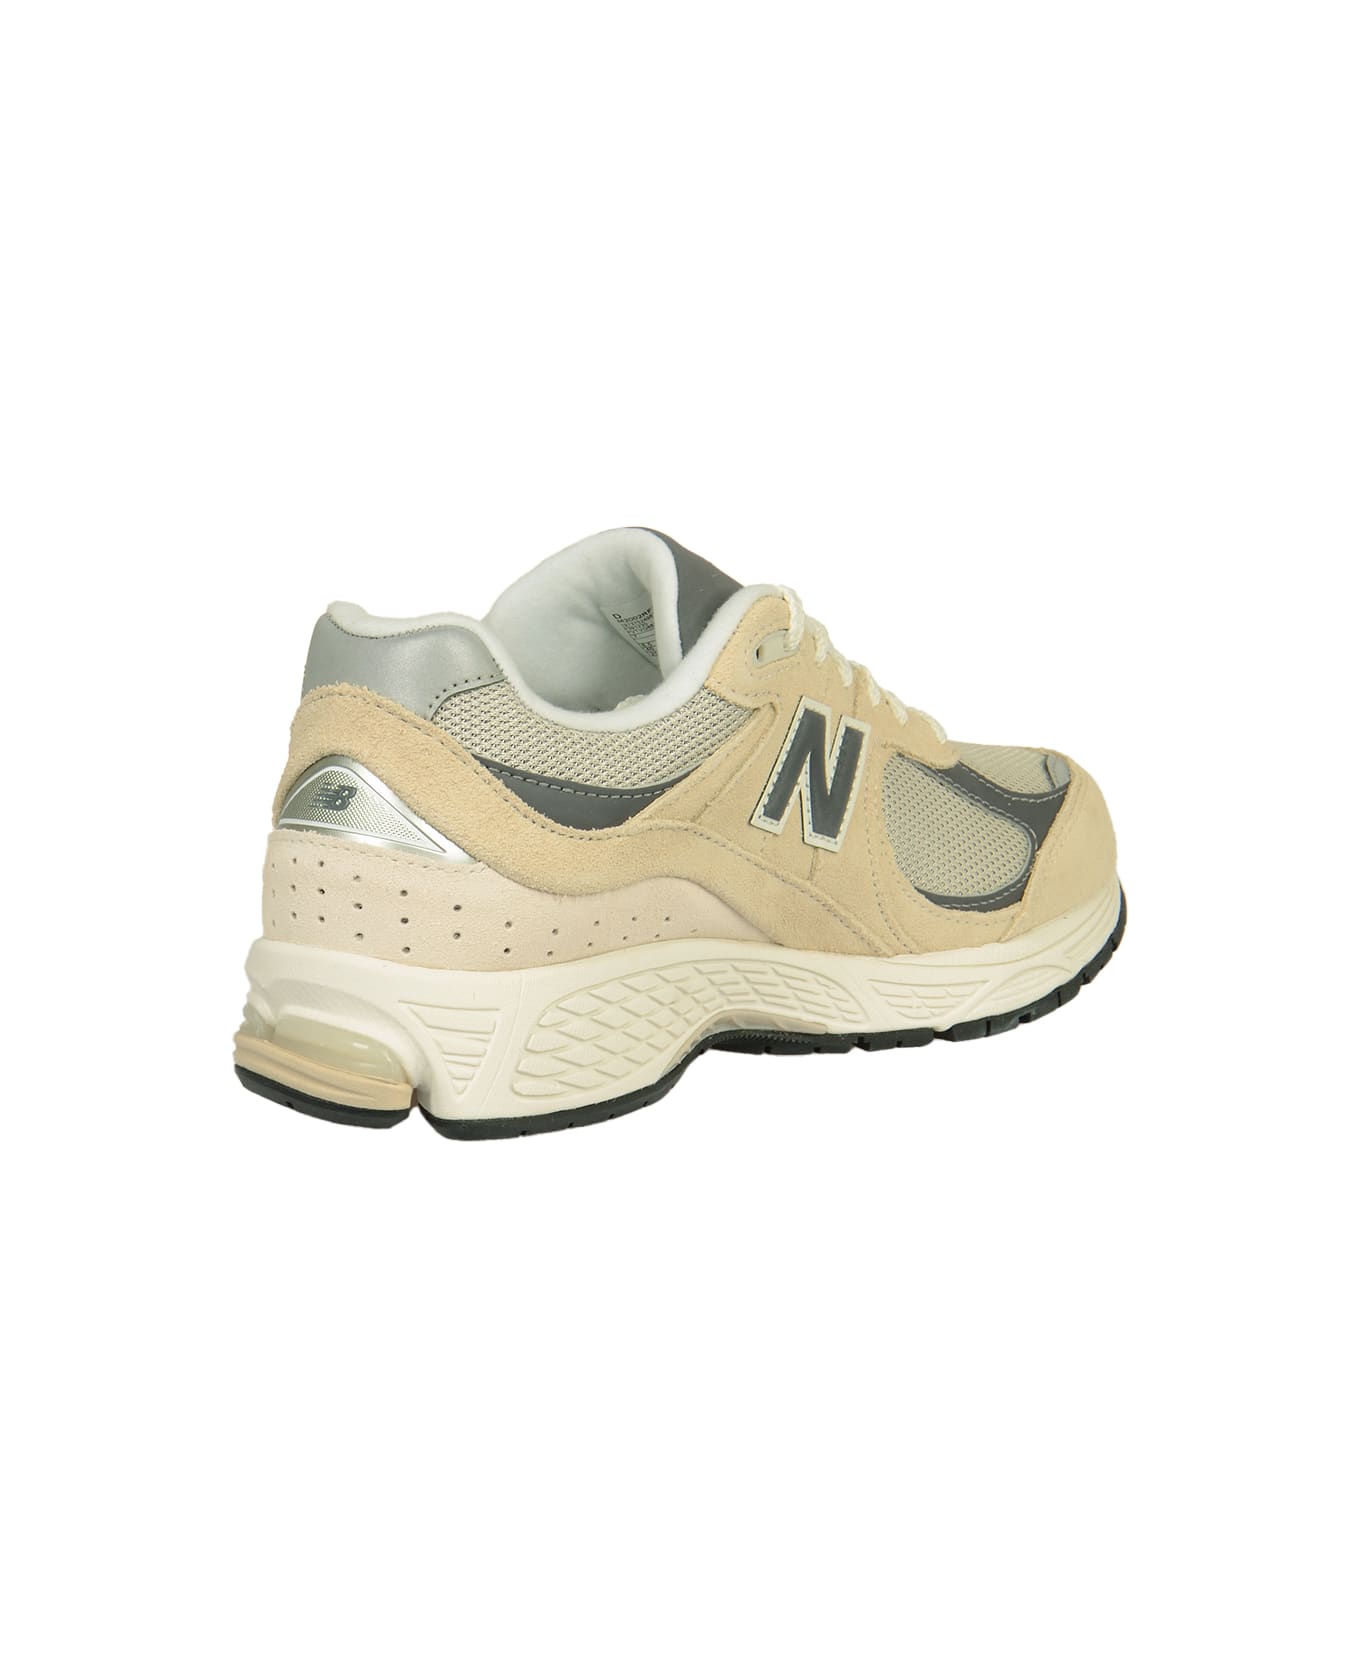 New Balance 2002 Sneakers スニーカー